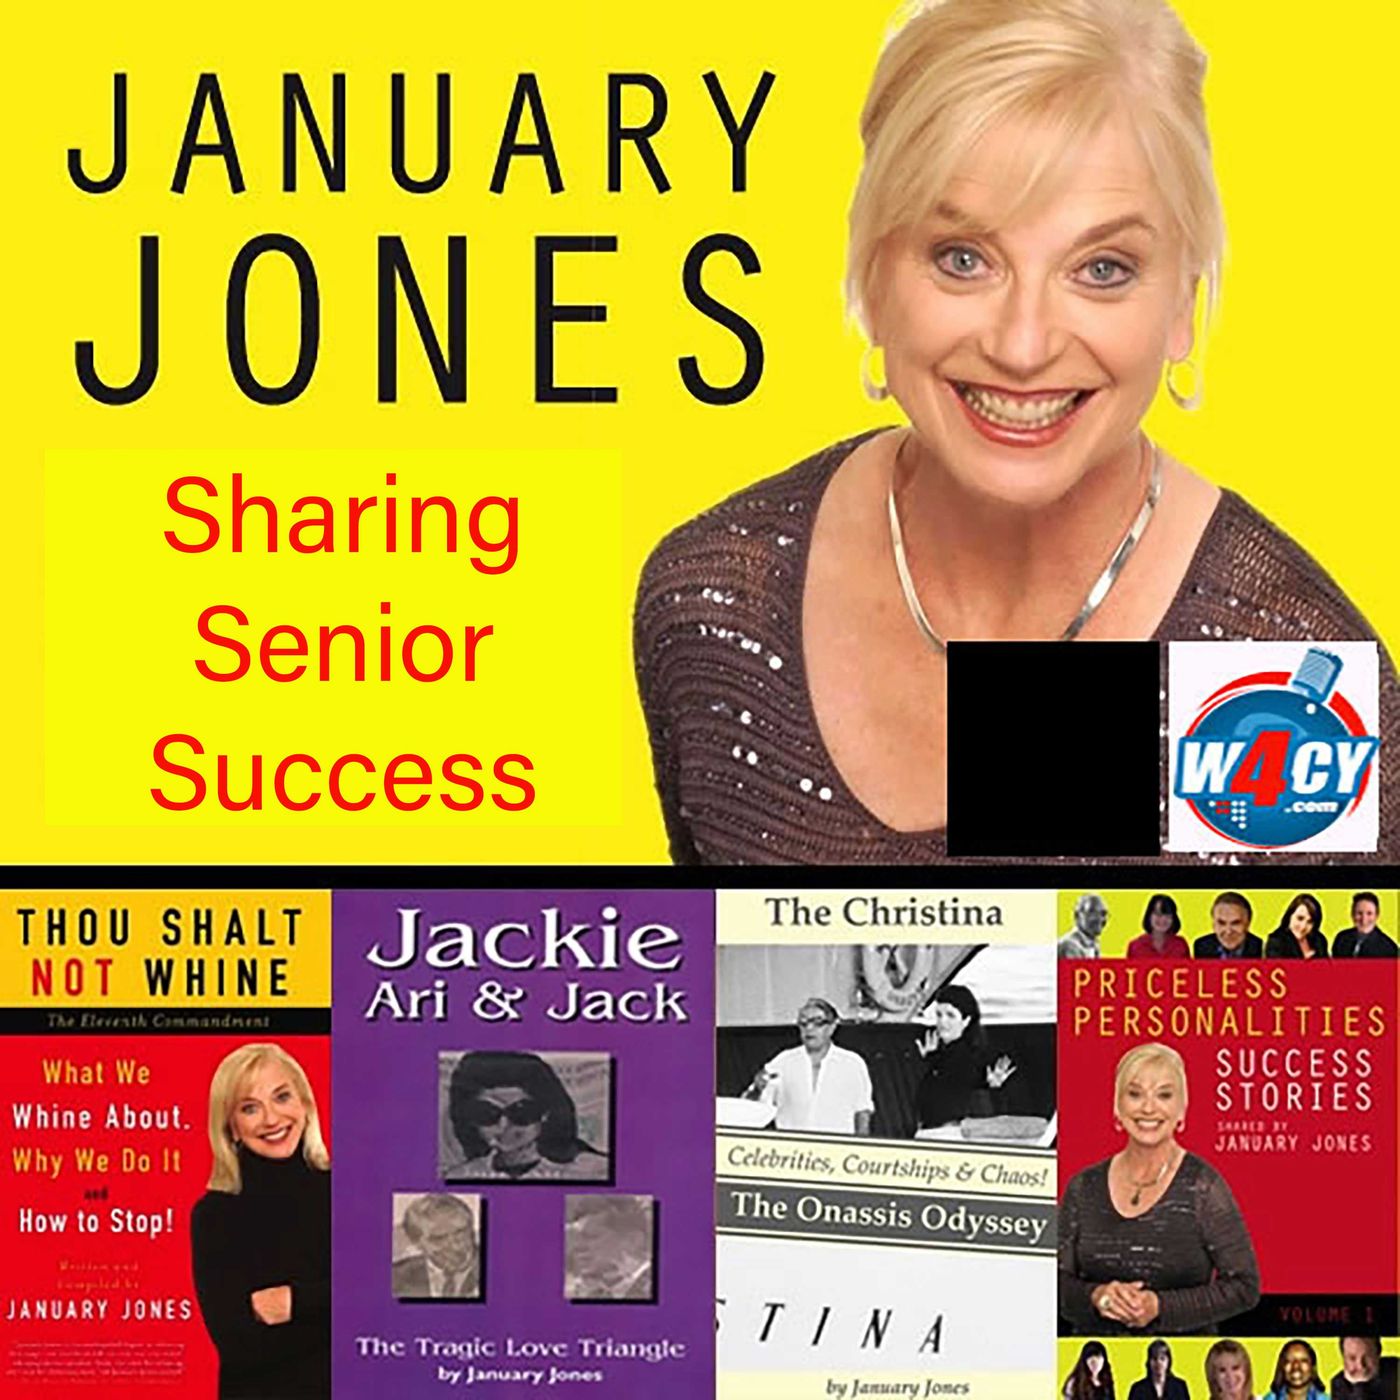 January Jones Sharing Success Stories